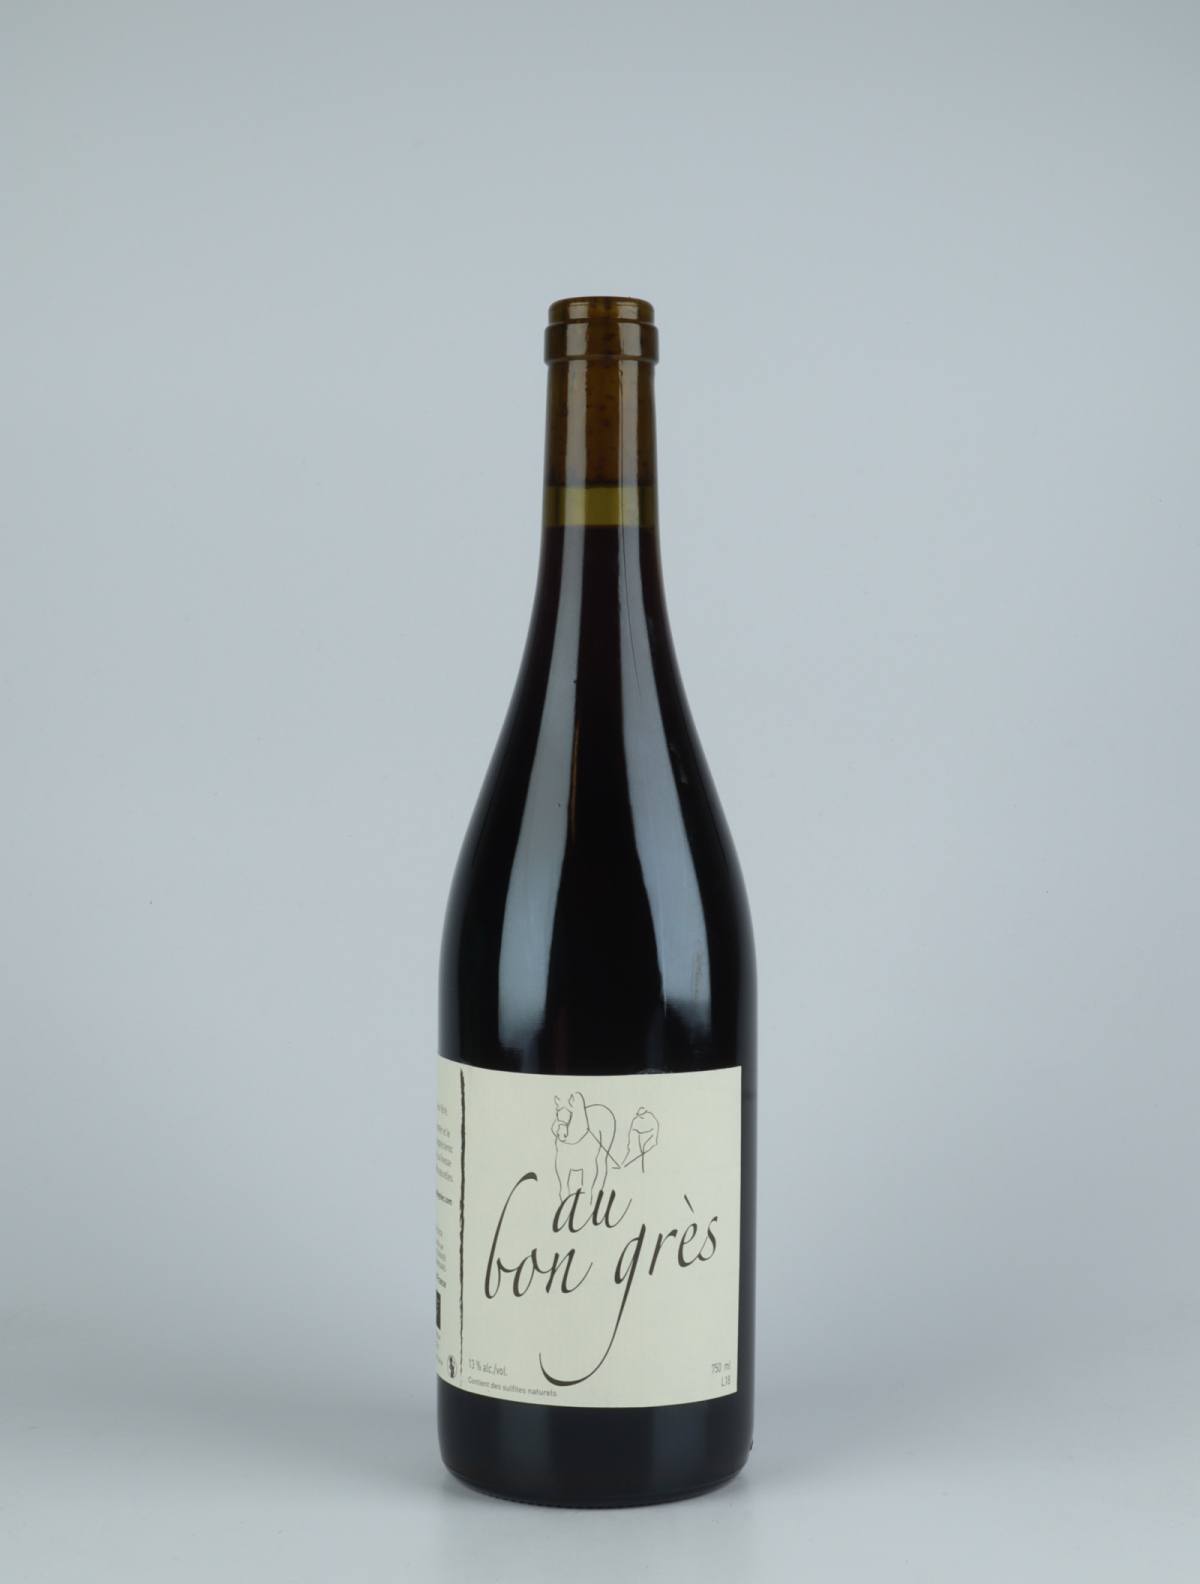 A bottle 2018 Au Bon Grès Red wine from Michel Guignier, Beaujolais in France